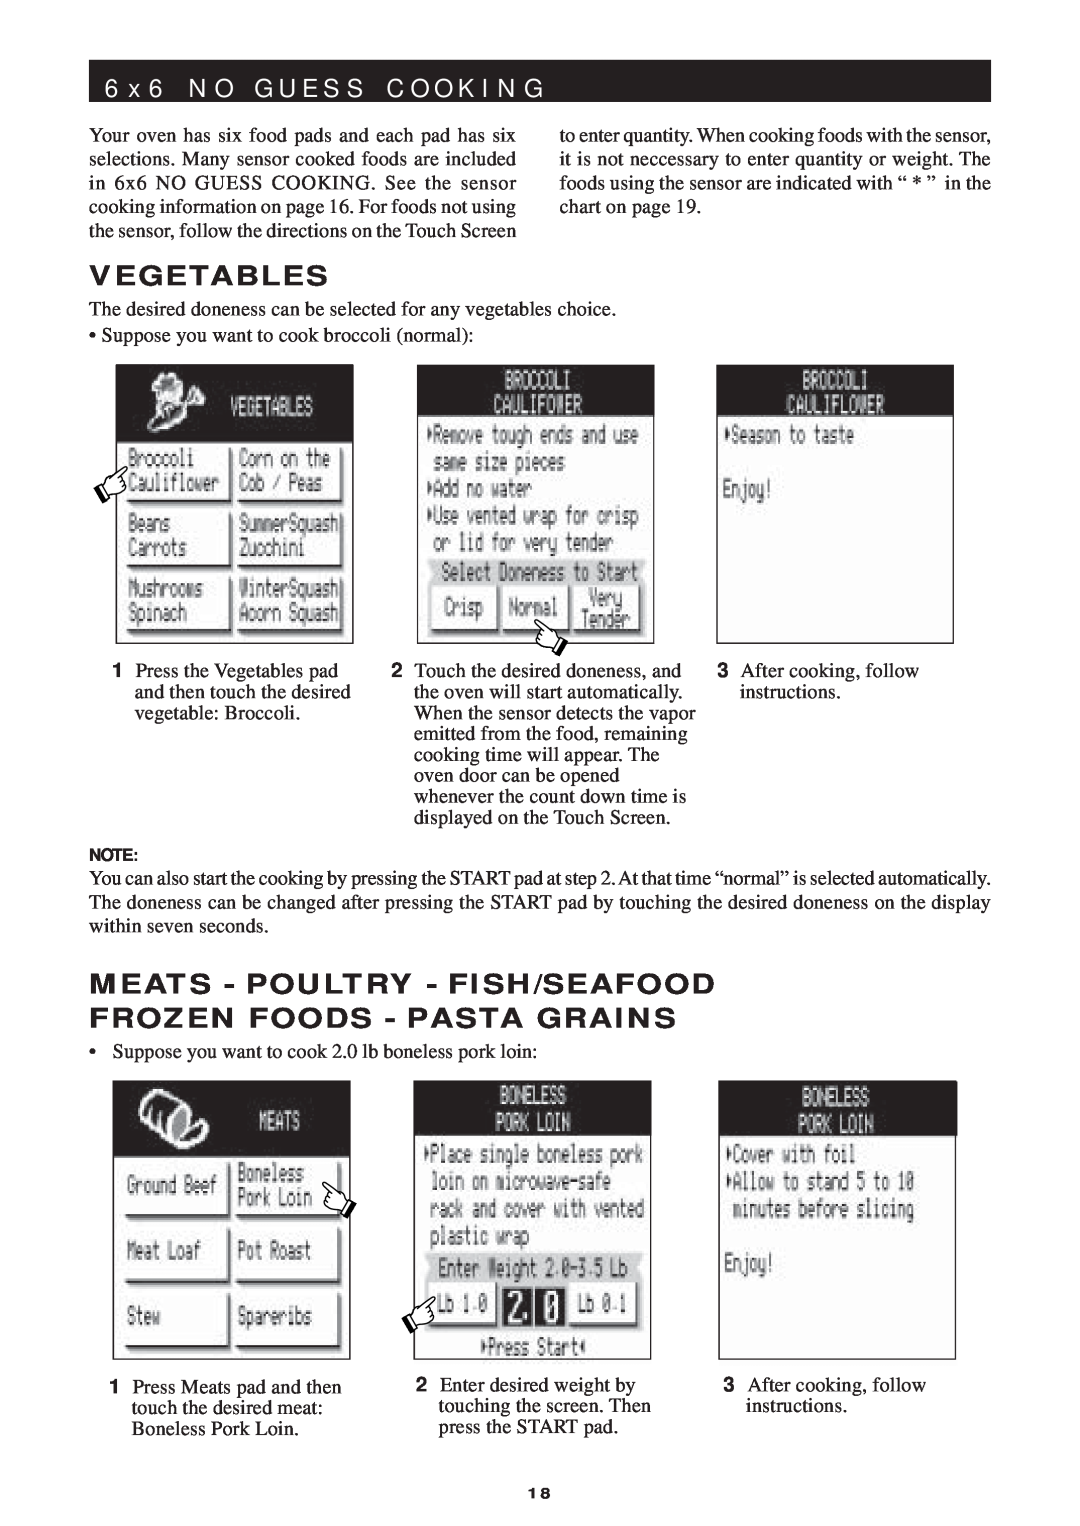 Sharp R-1751 6 x 6 N O G U E S S C O O K I N G, Vegetables, Meats - Poultry - Fish/Seafood Frozen Foods - Pasta Grains 